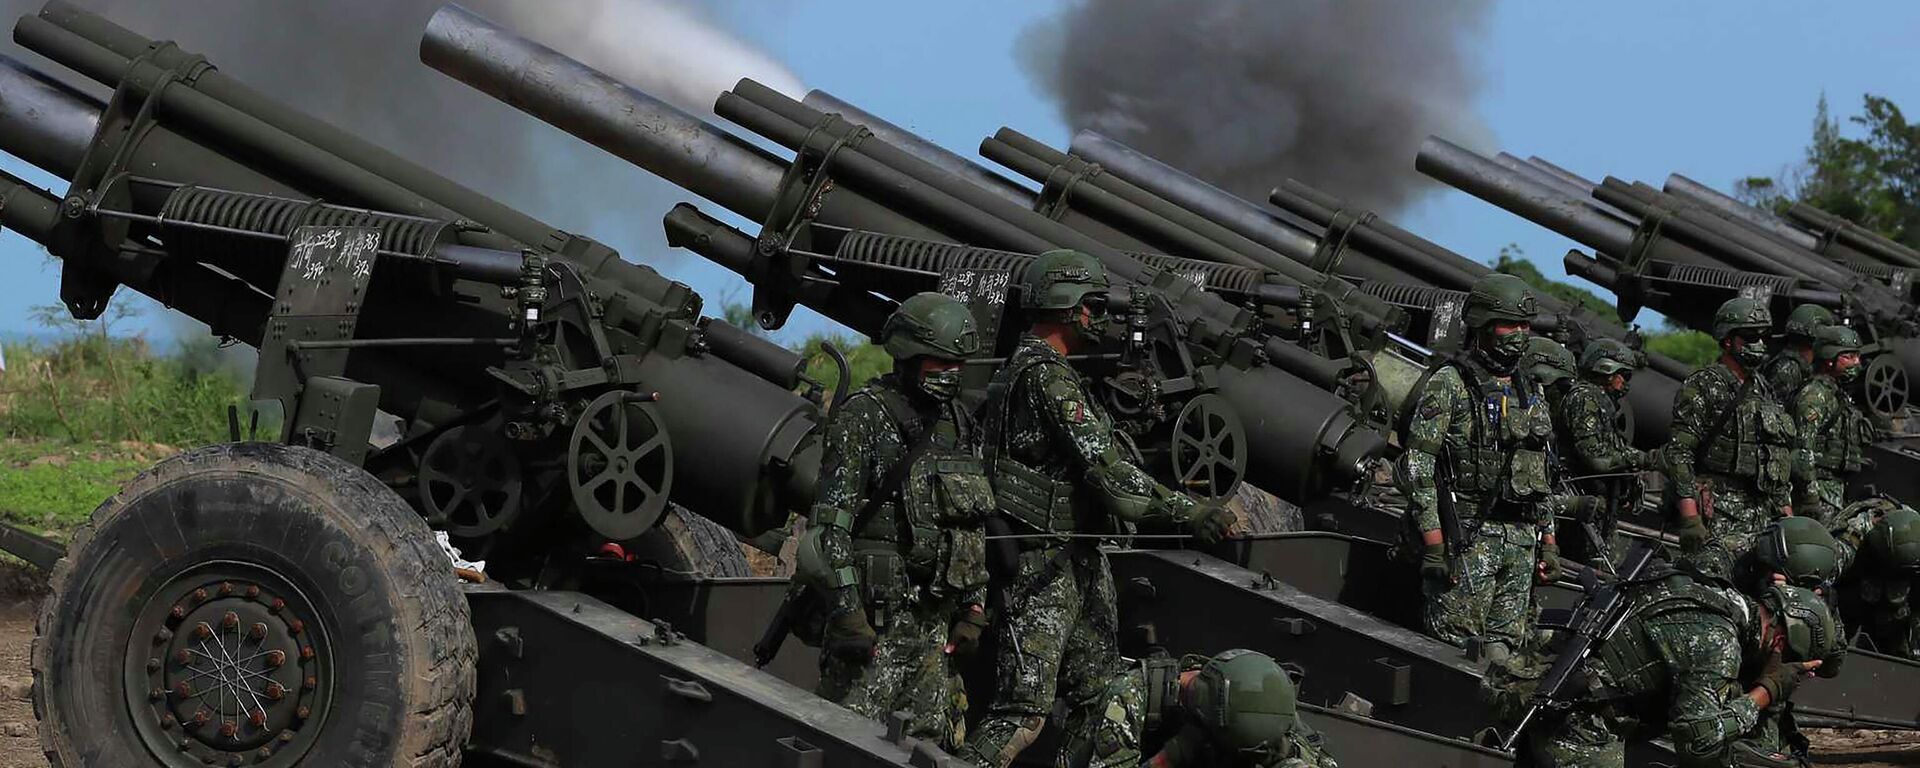 Armas de artilharia taiwanesas disparando durante exercícios antiaterrissagem Han Guang realizados ao longo da costa de Pingtung, Taiwan, 16 de setembro de 2021 - Sputnik Brasil, 1920, 08.08.2022